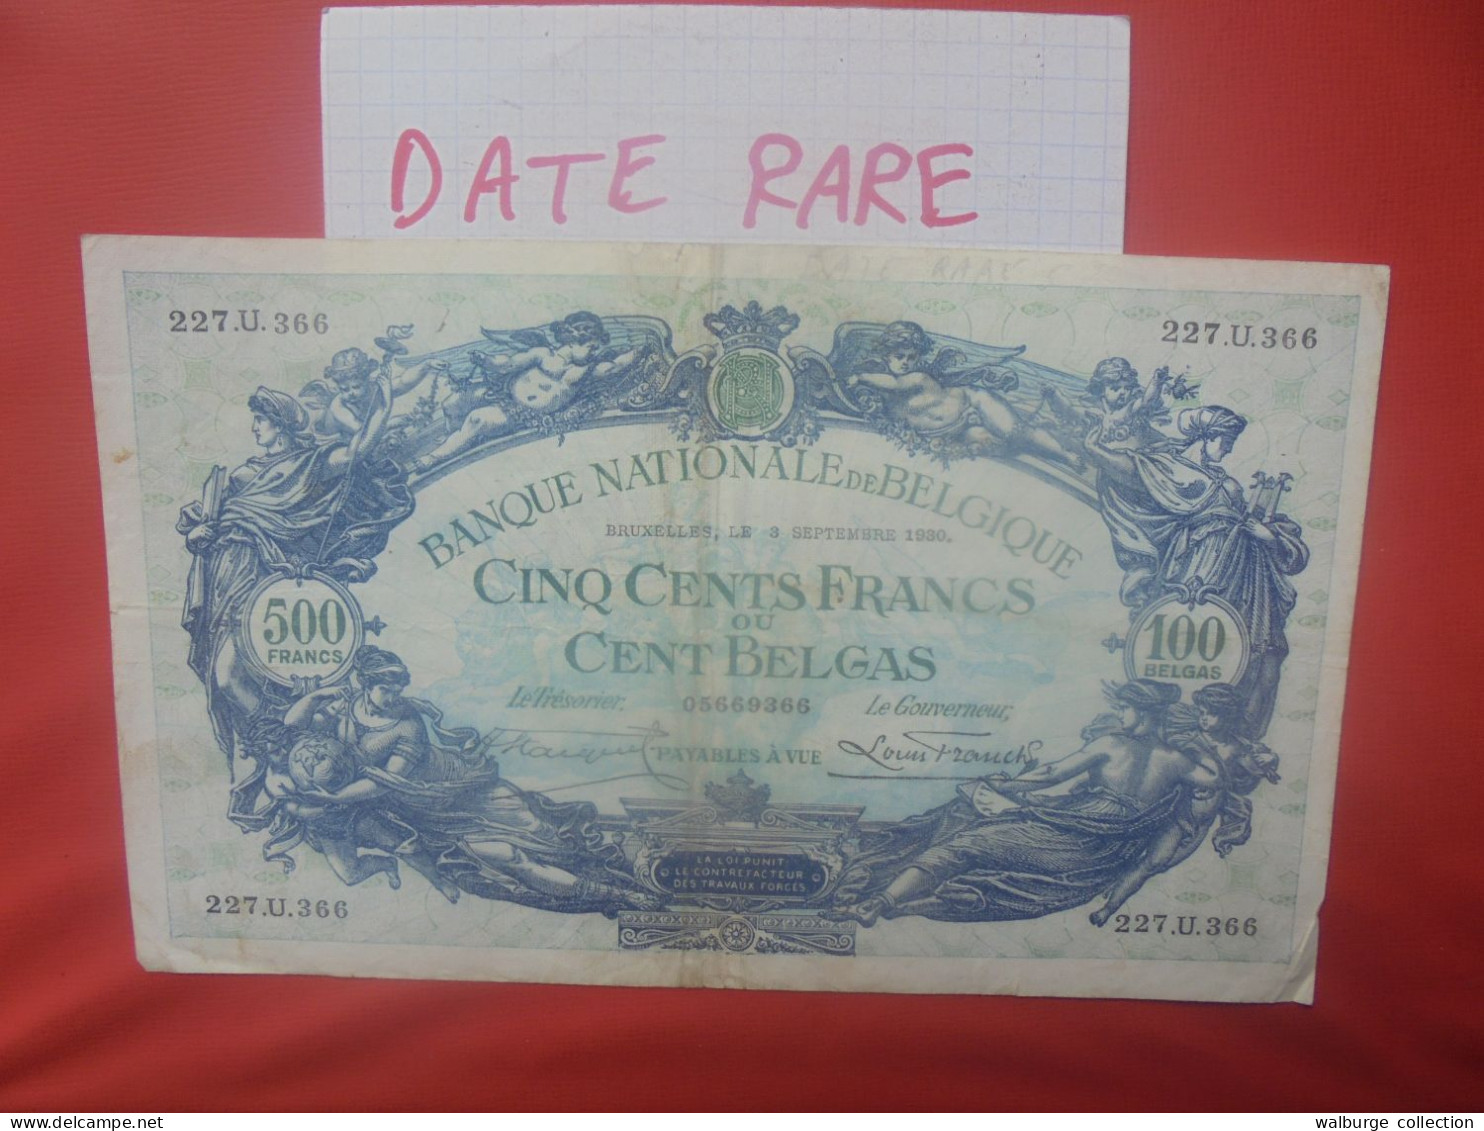 BELGIQUE 500 Francs 1930 (Date+Rare) Circuler (B.18) - 500 Francos-100 Belgas